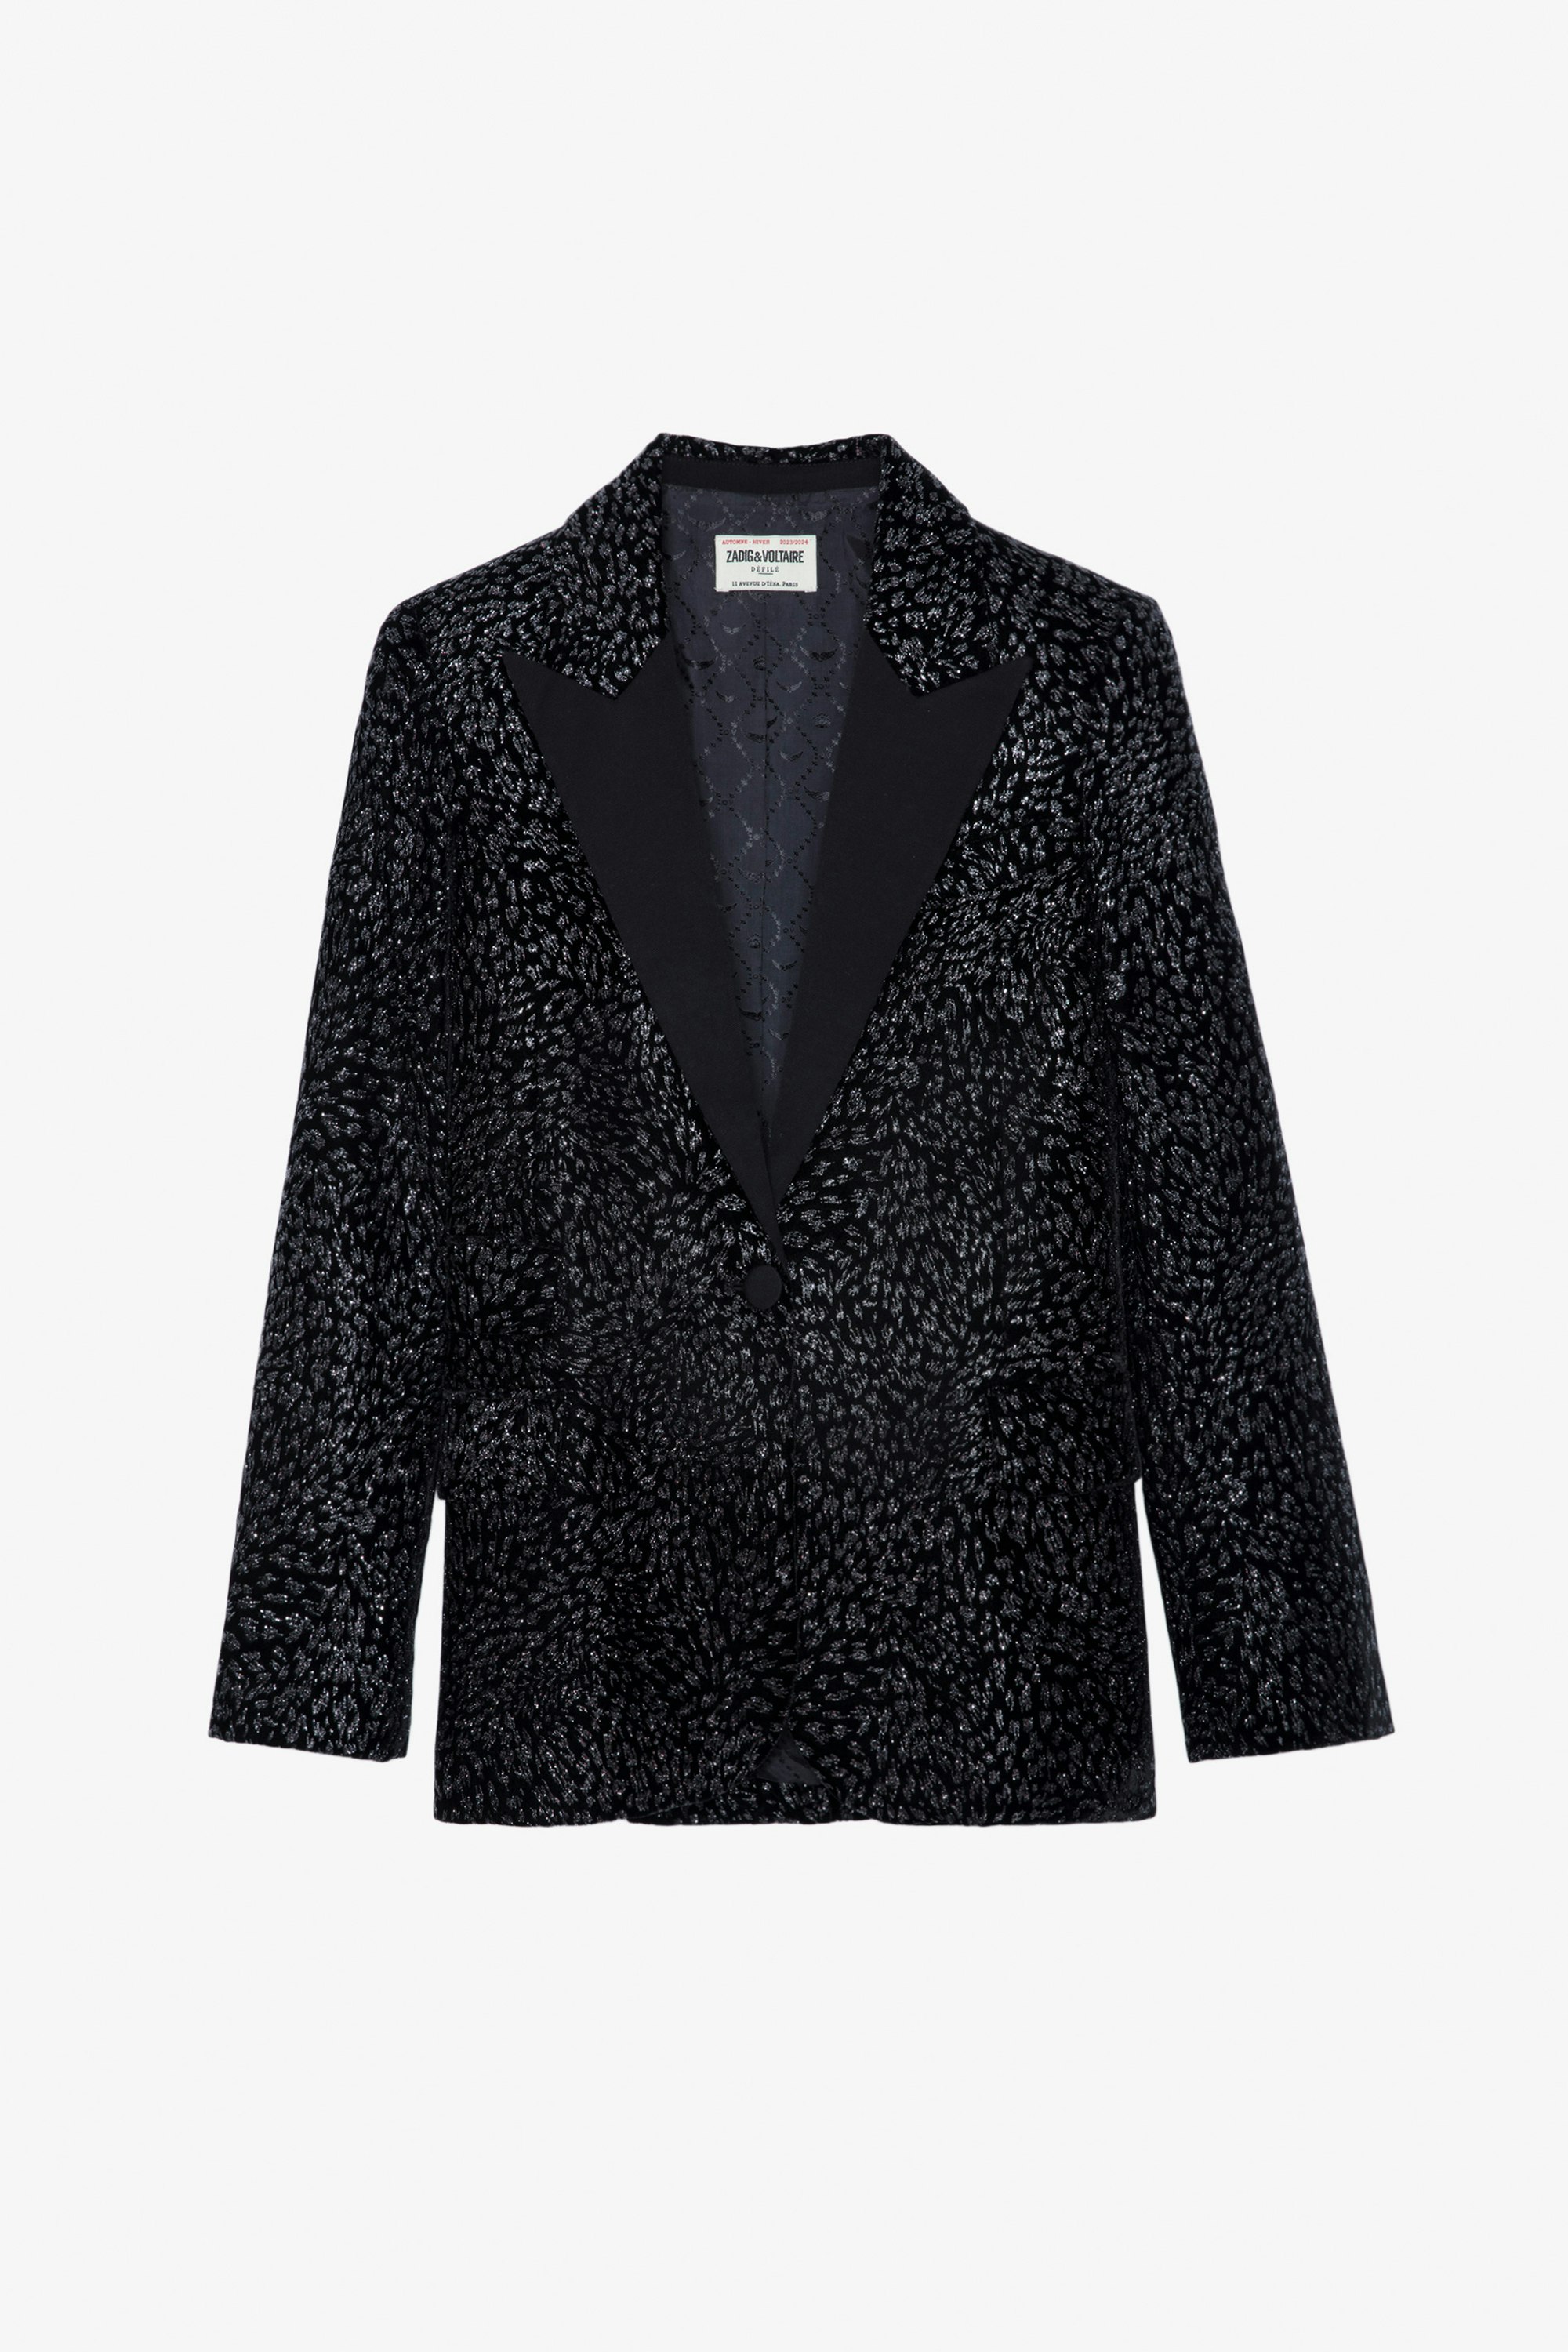 Venus Velvet Blazer - Women’s black glitter velvet tailored blazer with leopard motifs and button fastening.